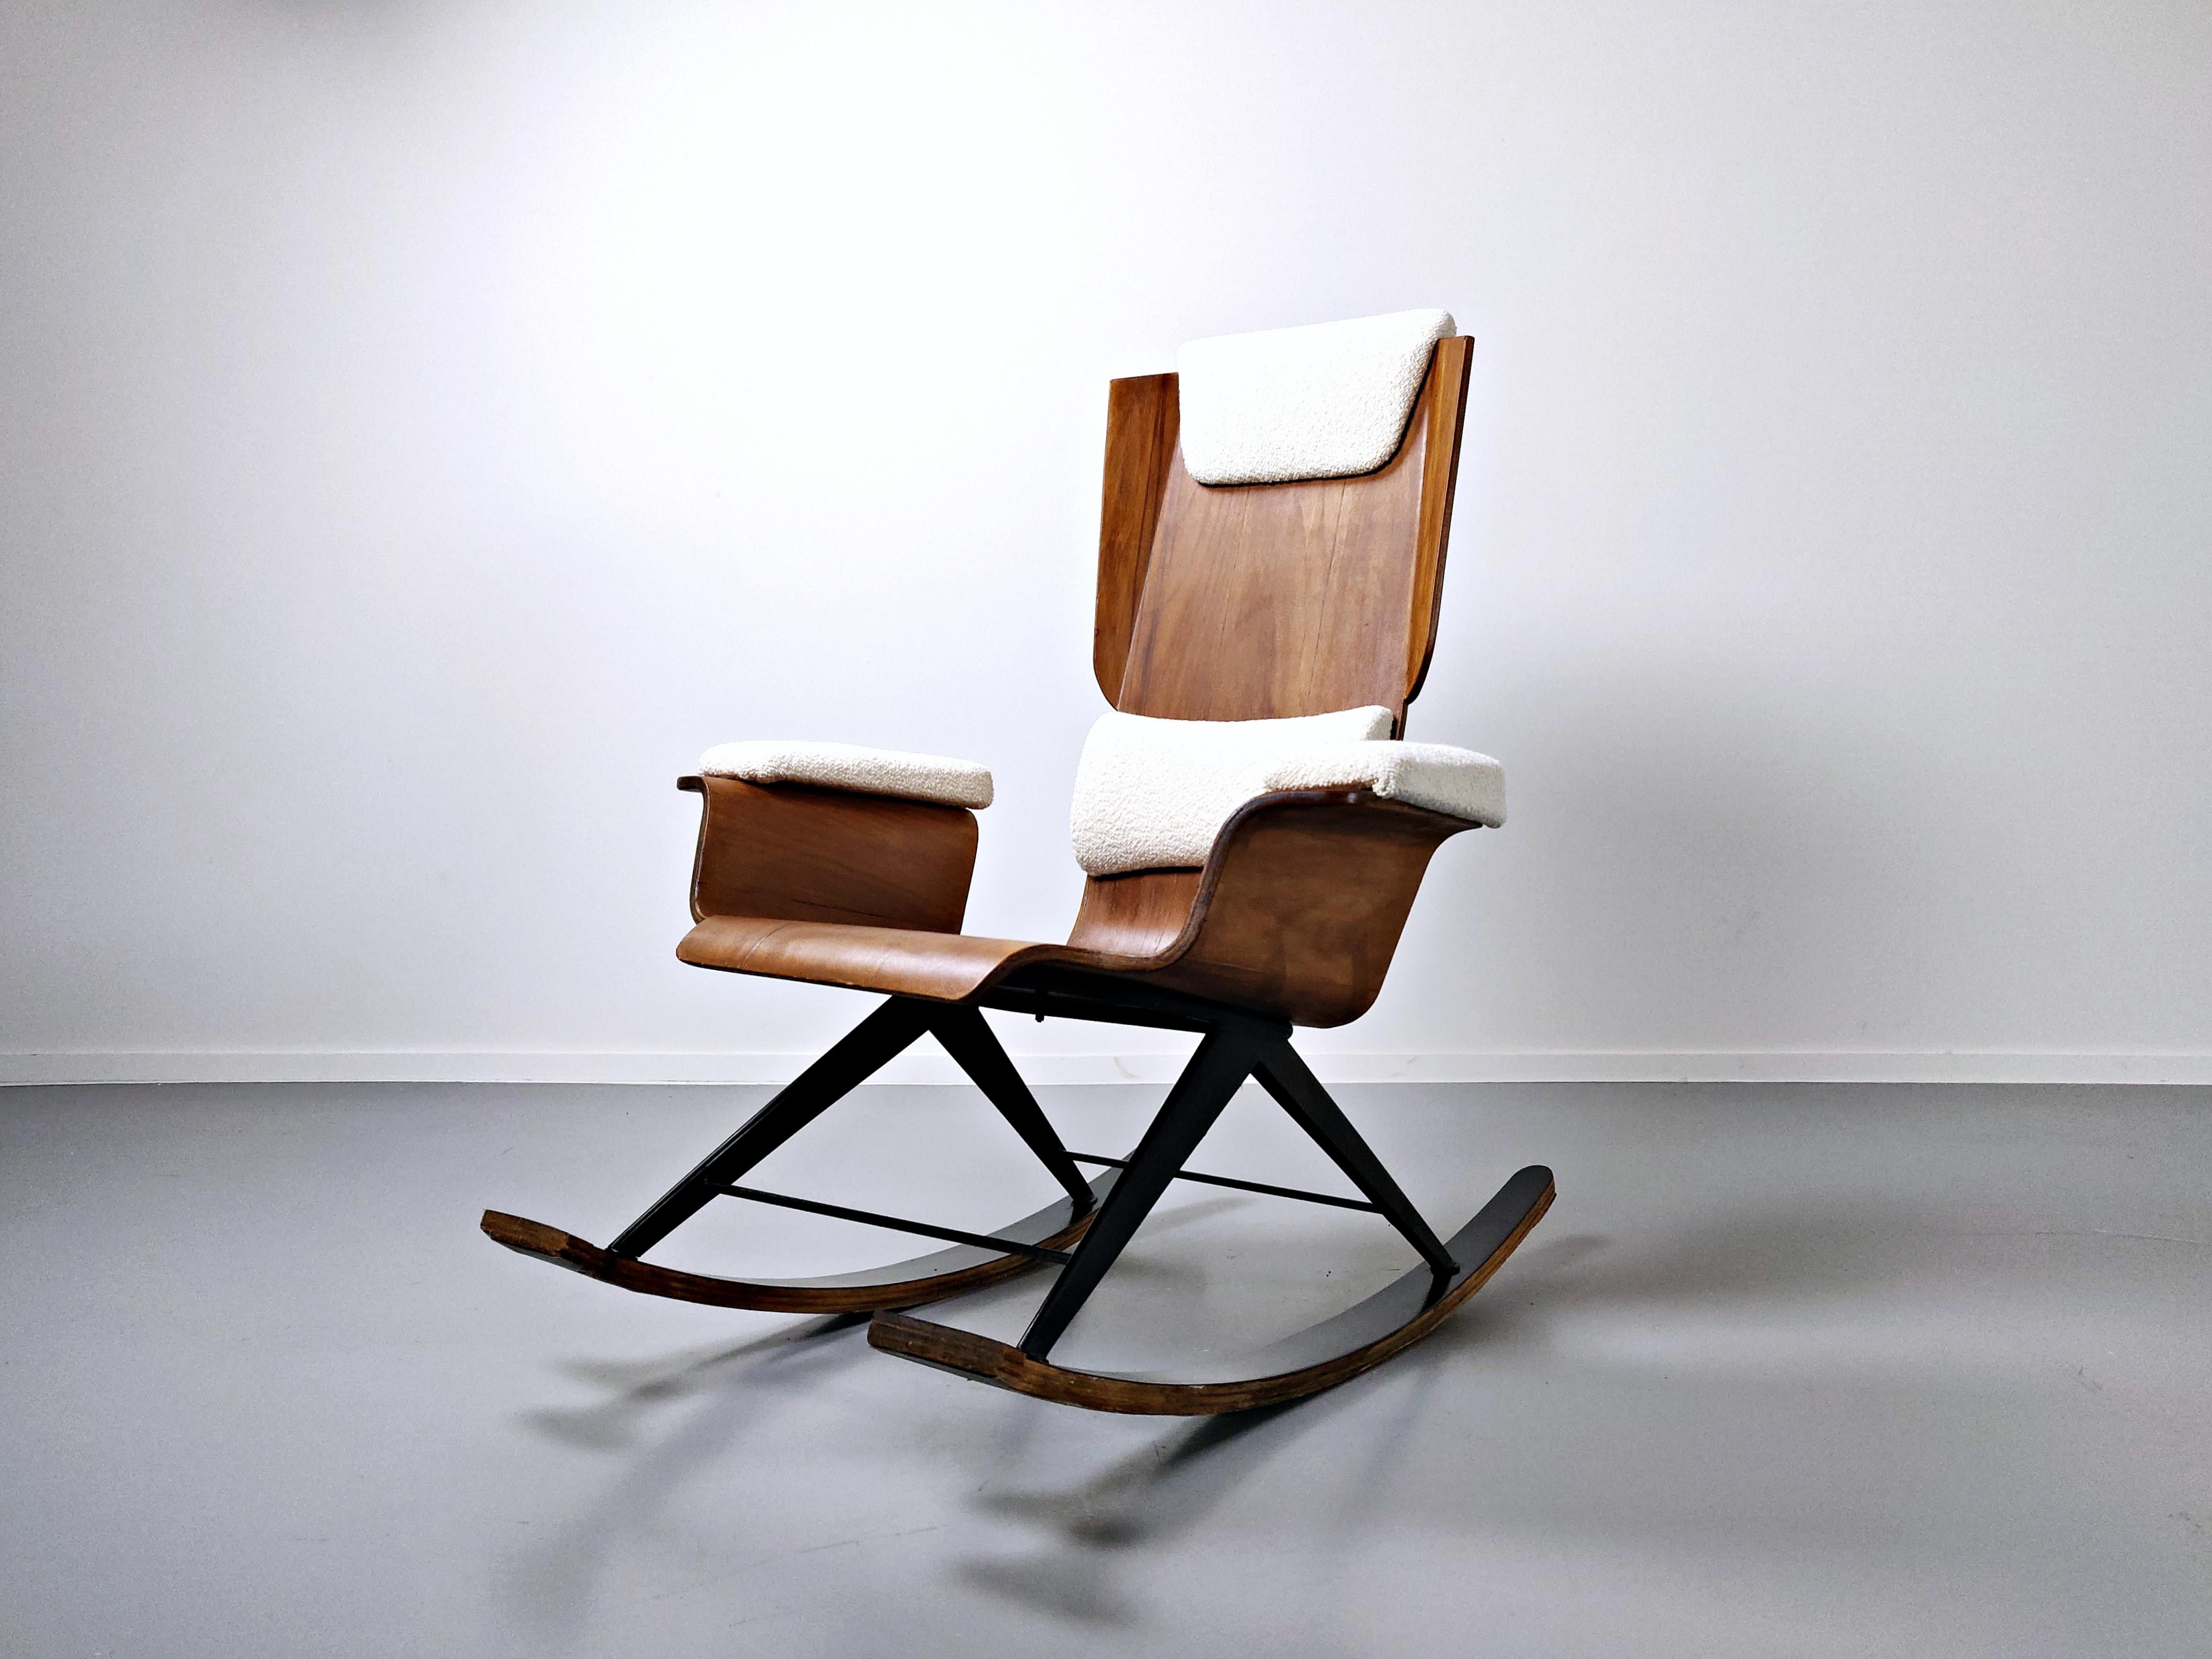 Italian Wood rocking chair by Carlo Ratti - Italy 1960s